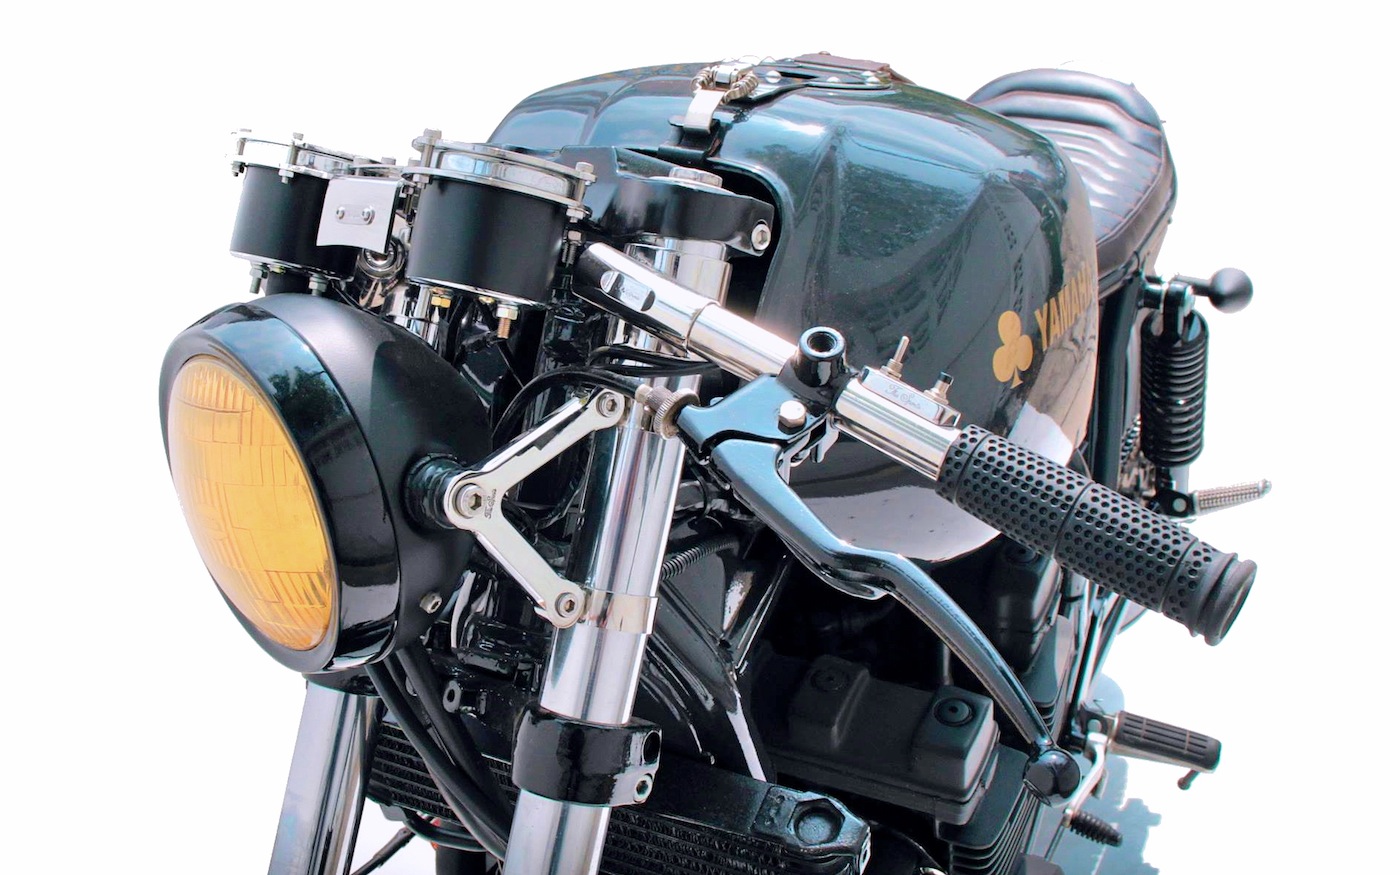 Тест-драйв мотоцикла Yamaha XJR400